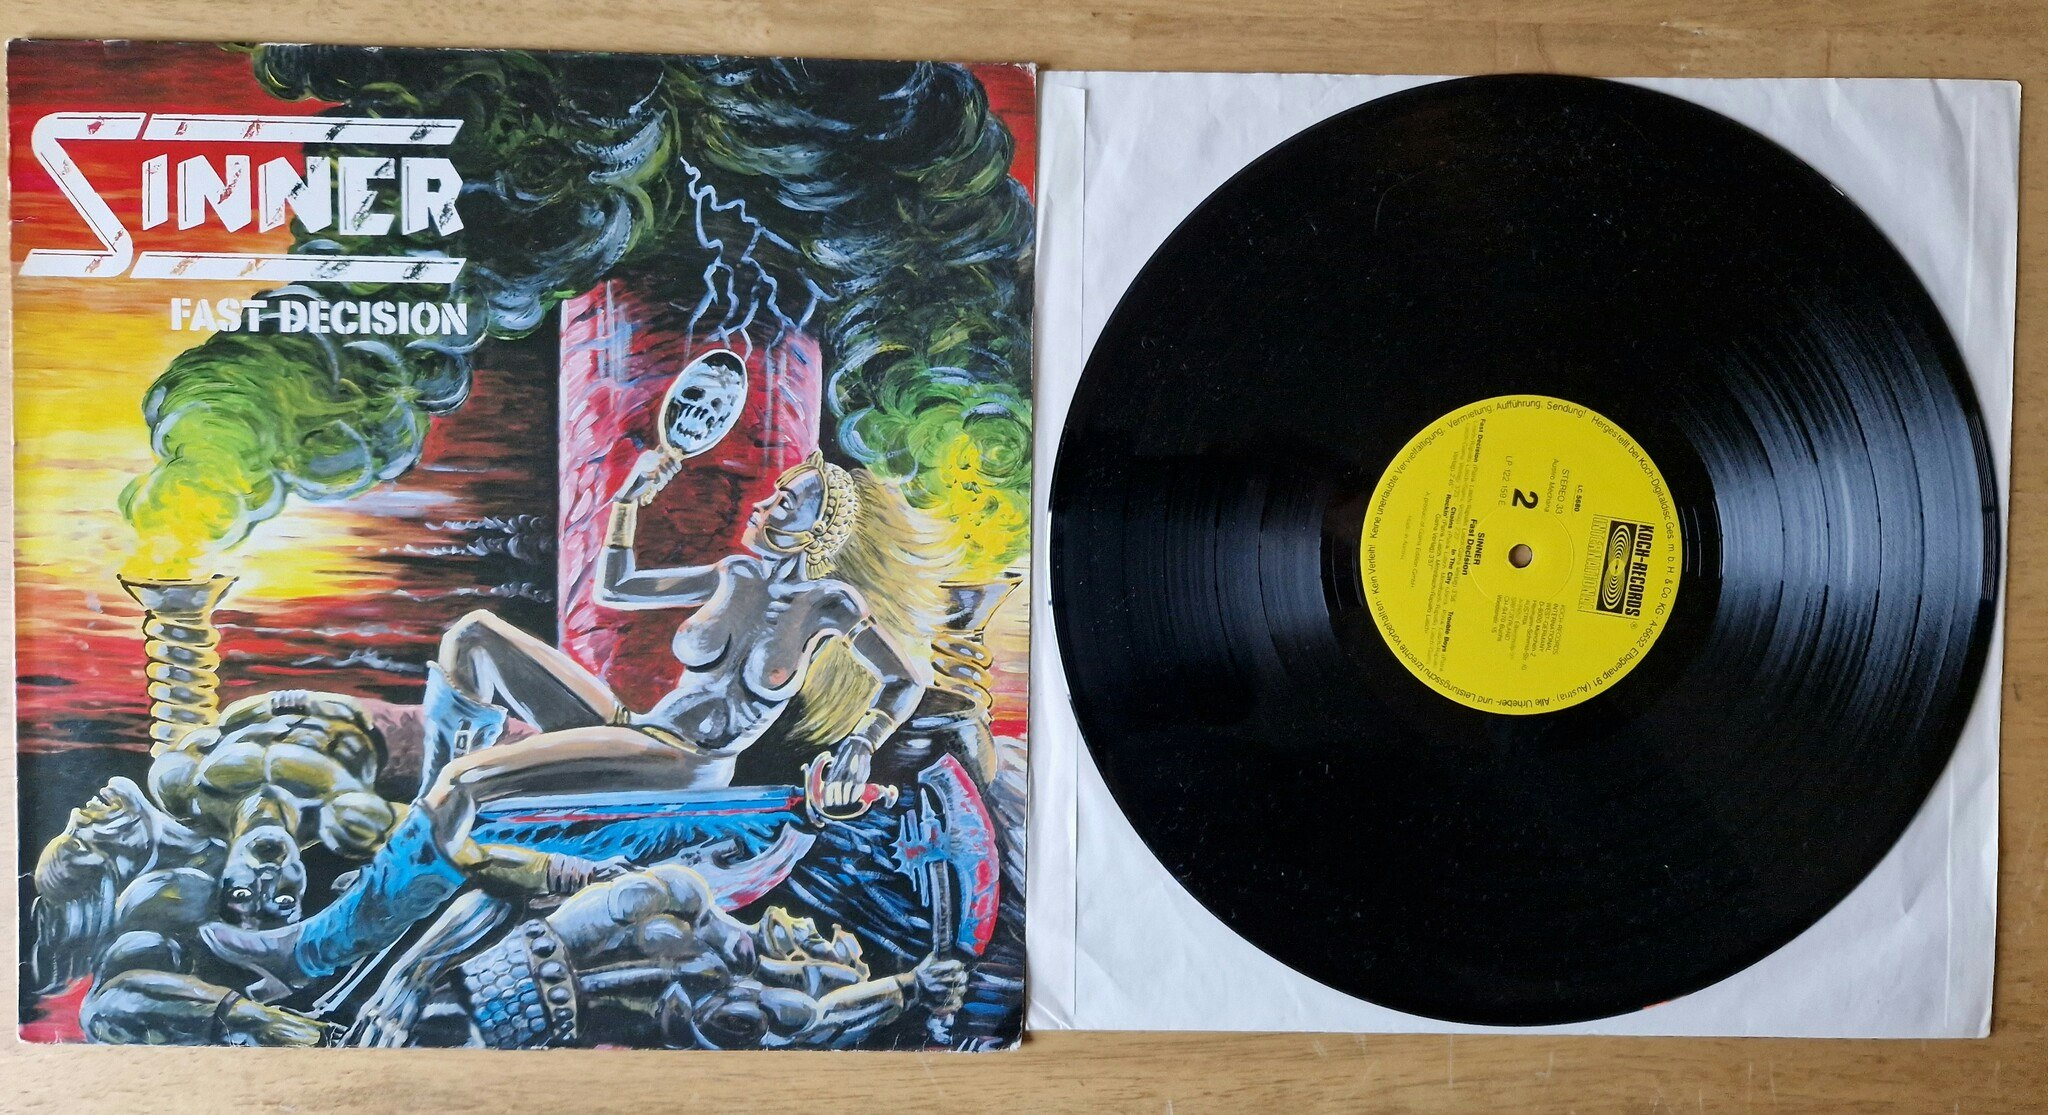 Sinner, Fast decision. Vinyl LP